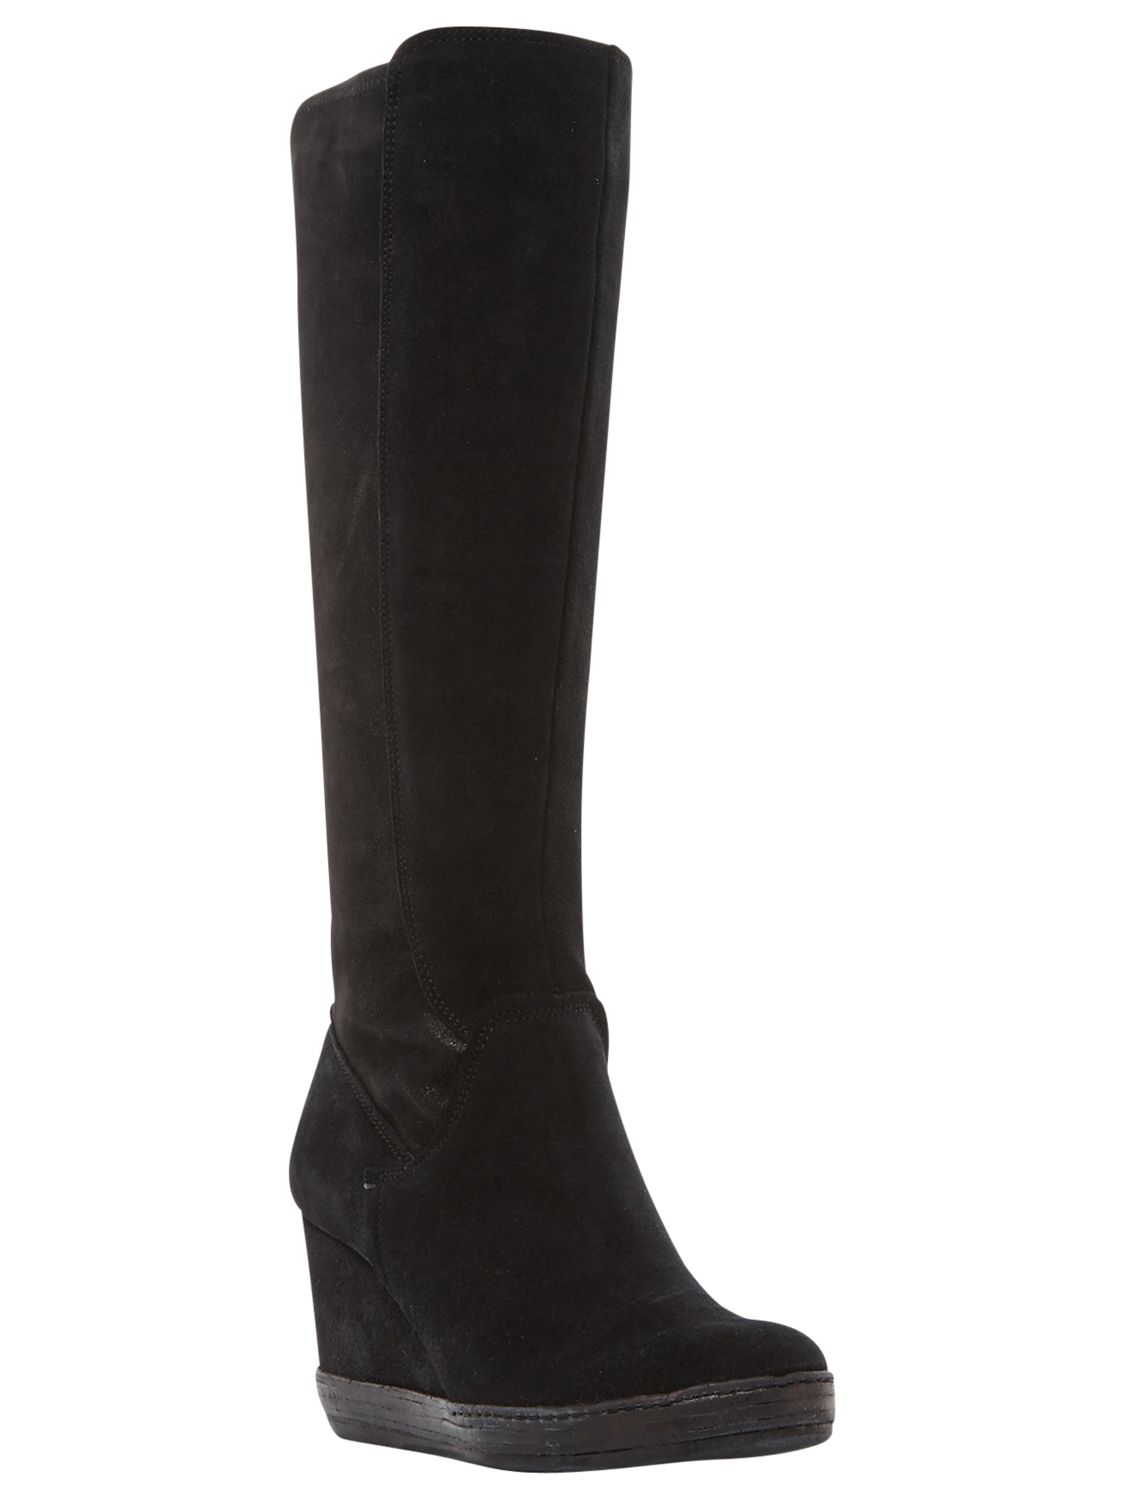 Dune Vera Wedge Heeled Knee High Boots, Black, 8